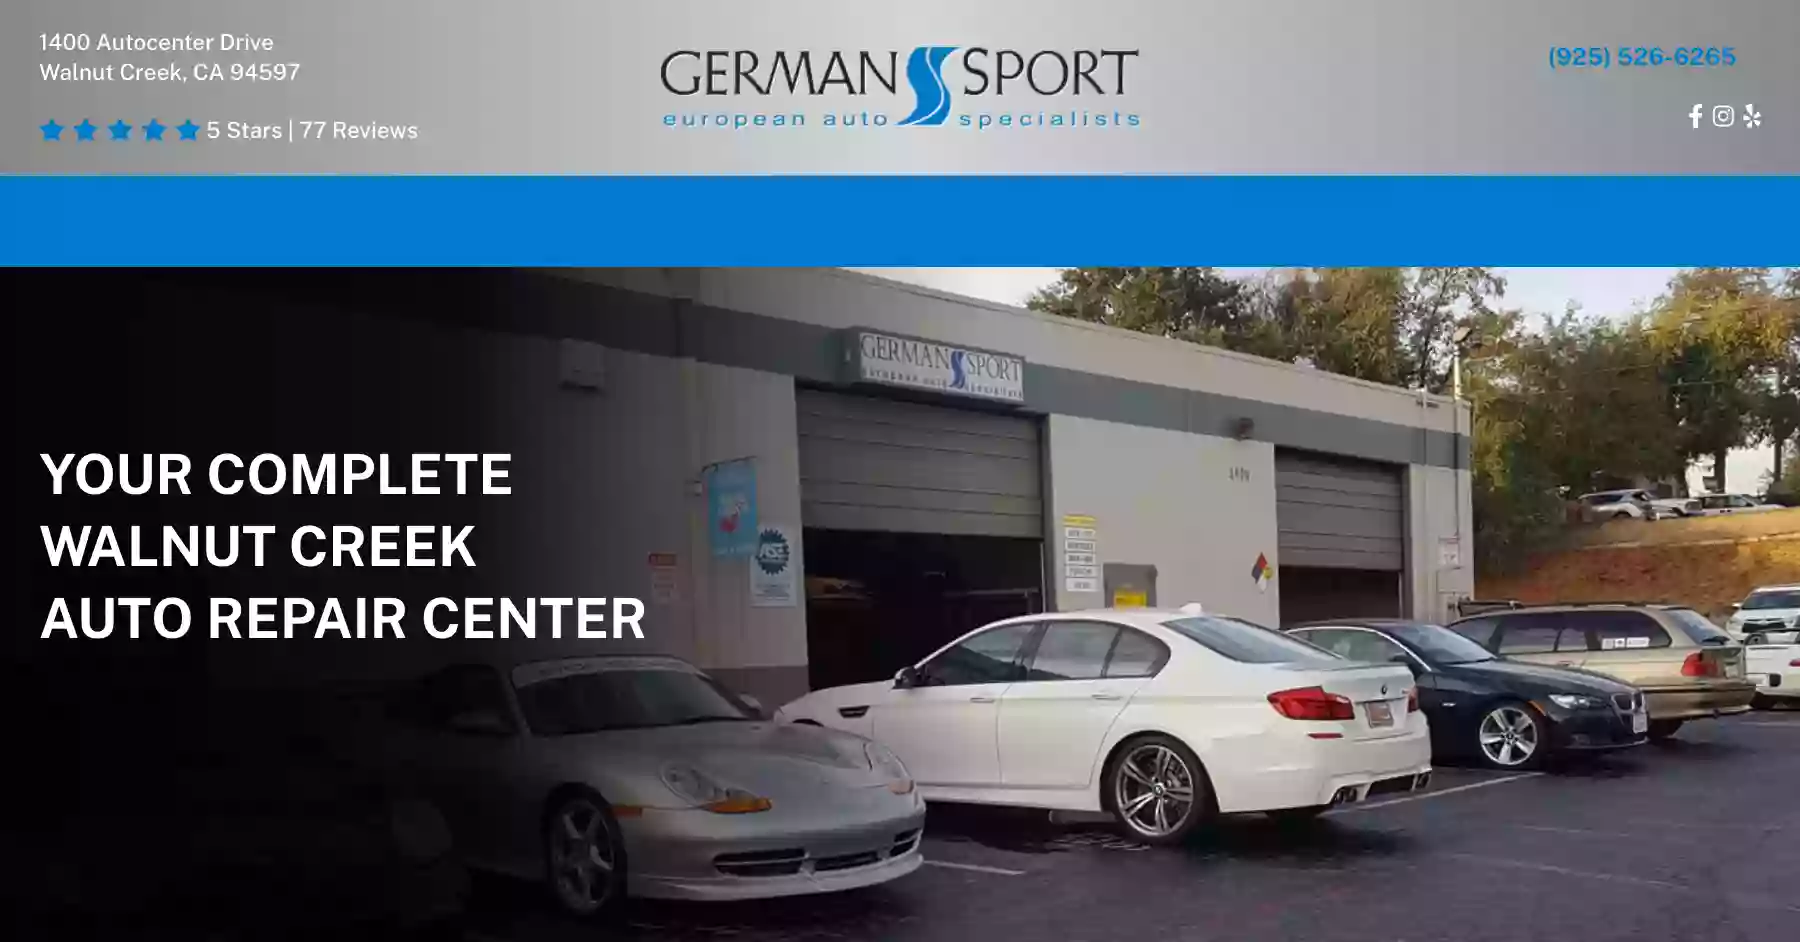 German Sport - European Auto Specialists